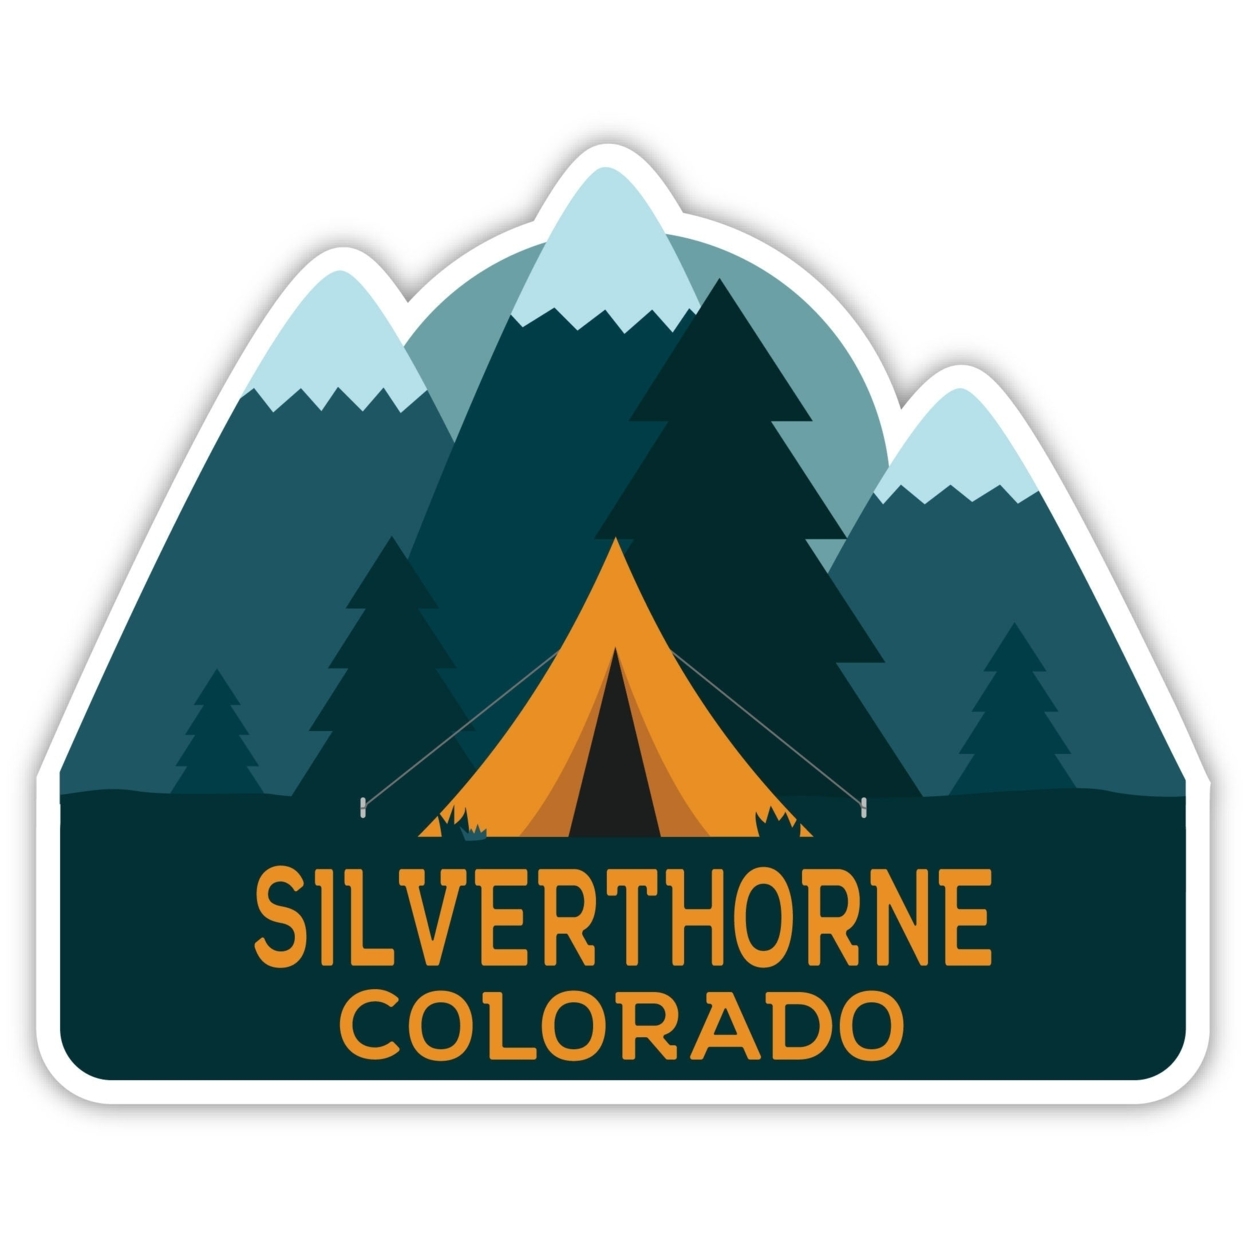 Silverthorne Colorado Souvenir Decorative Stickers (Choose Theme And Size) - Single Unit, 4-Inch, Adventures Awaits